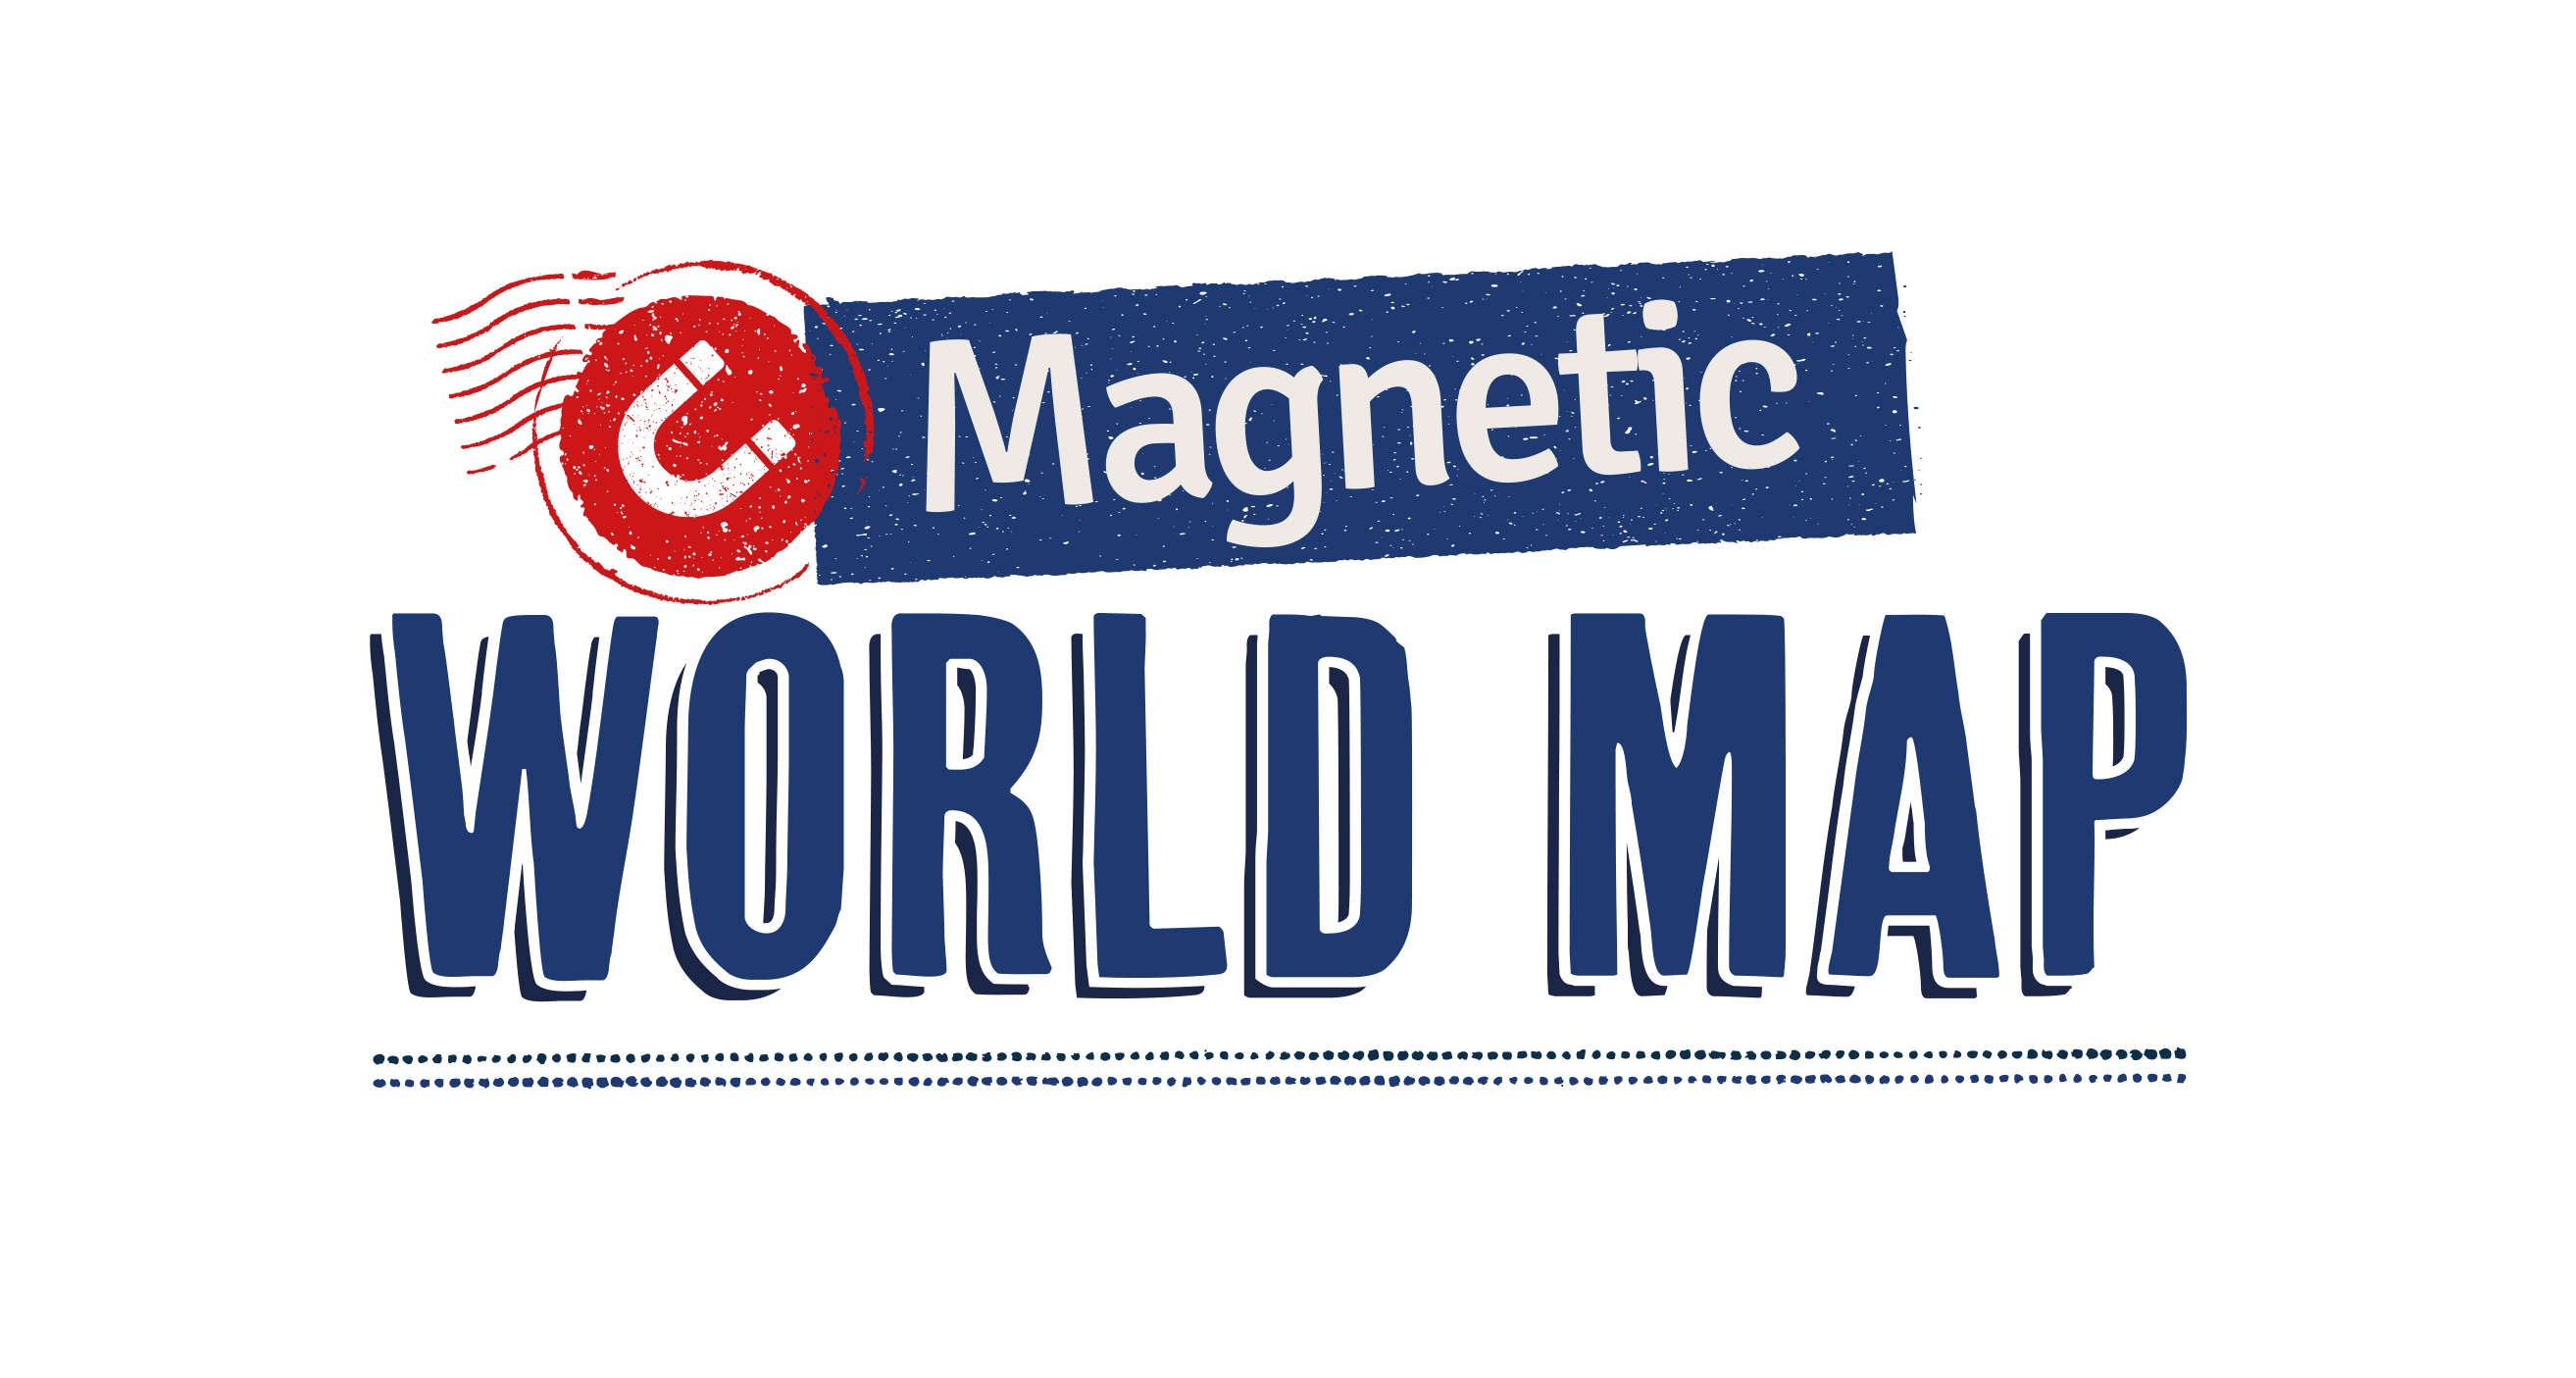 Magnetická mapa sveta EN verzia BUKI